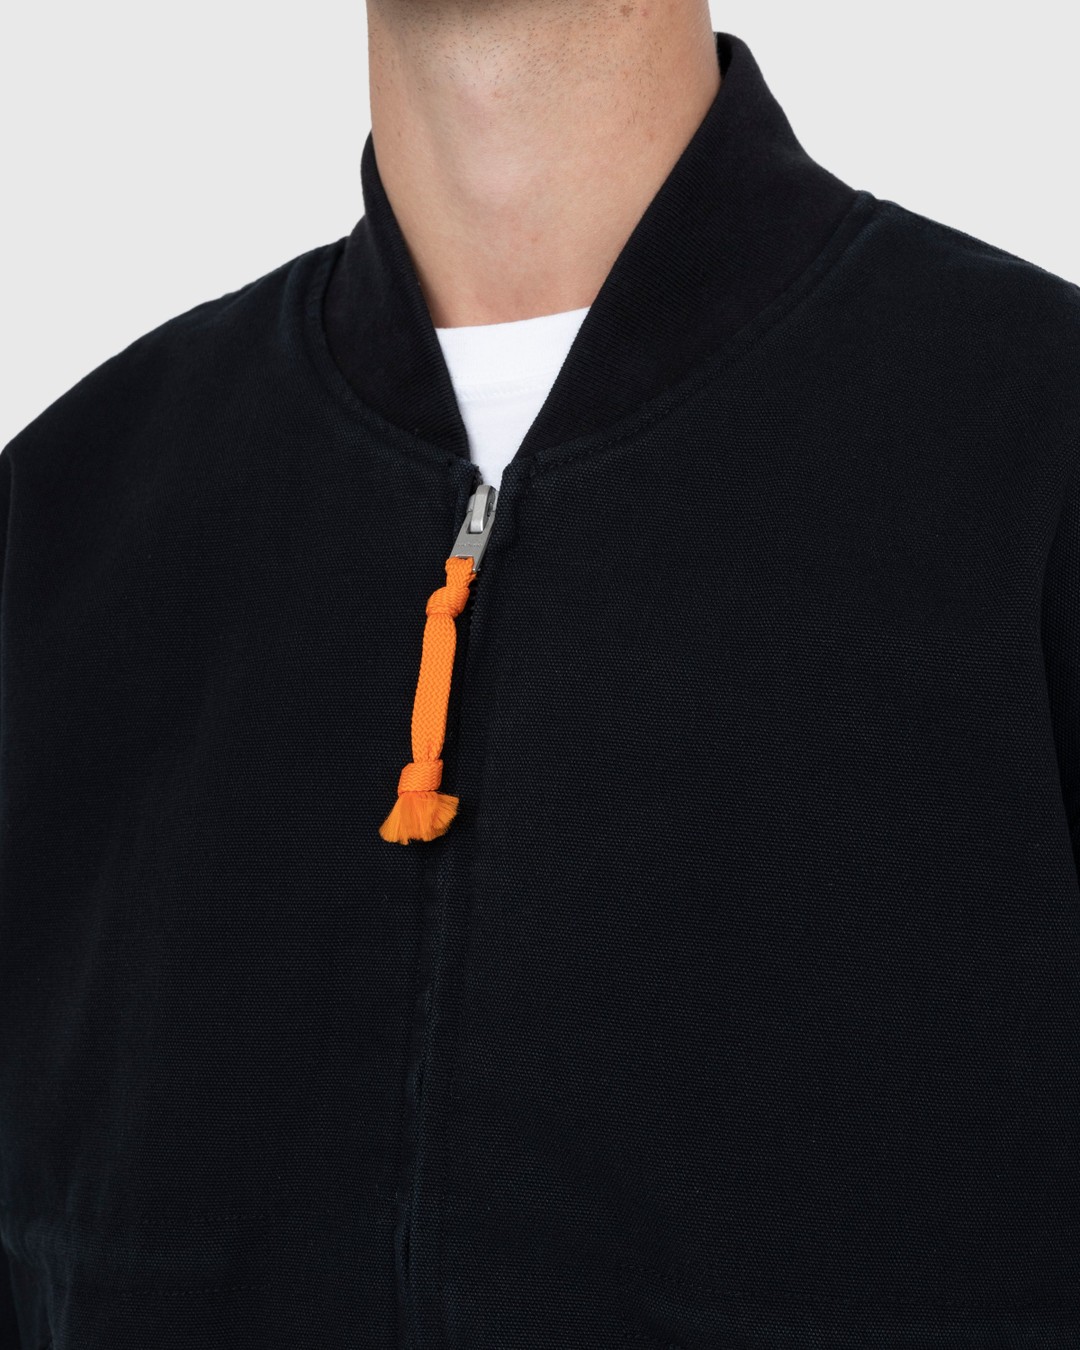 Acne Studios – Organic Cotton Bomber Jacket Black - Outerwear - Black - Image 5